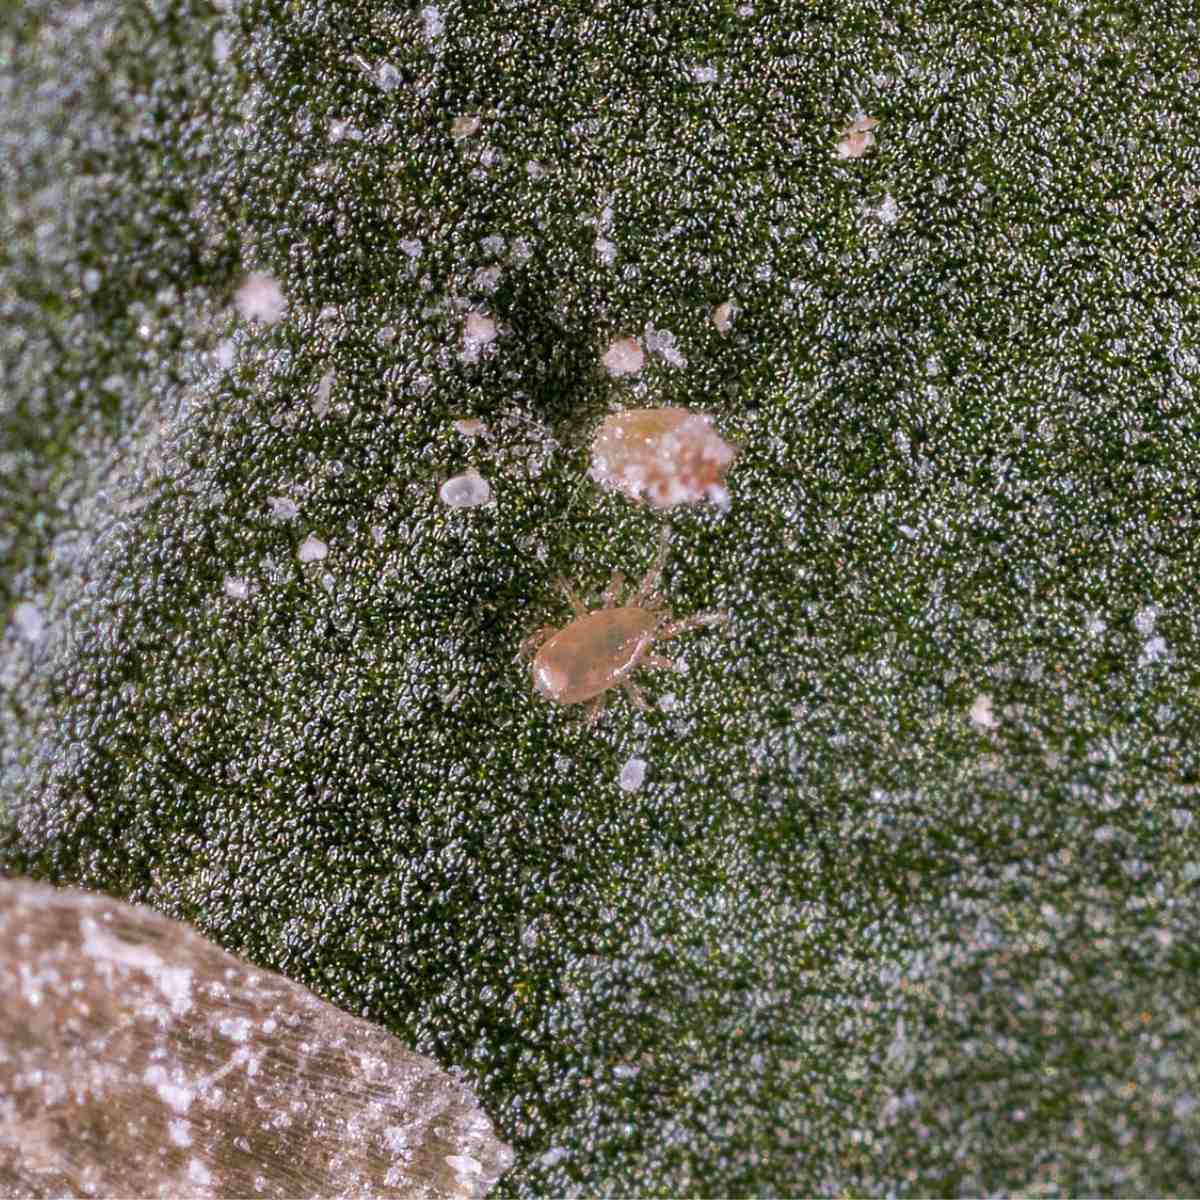 Neoseiulus cucumeris walking around on a leaf 